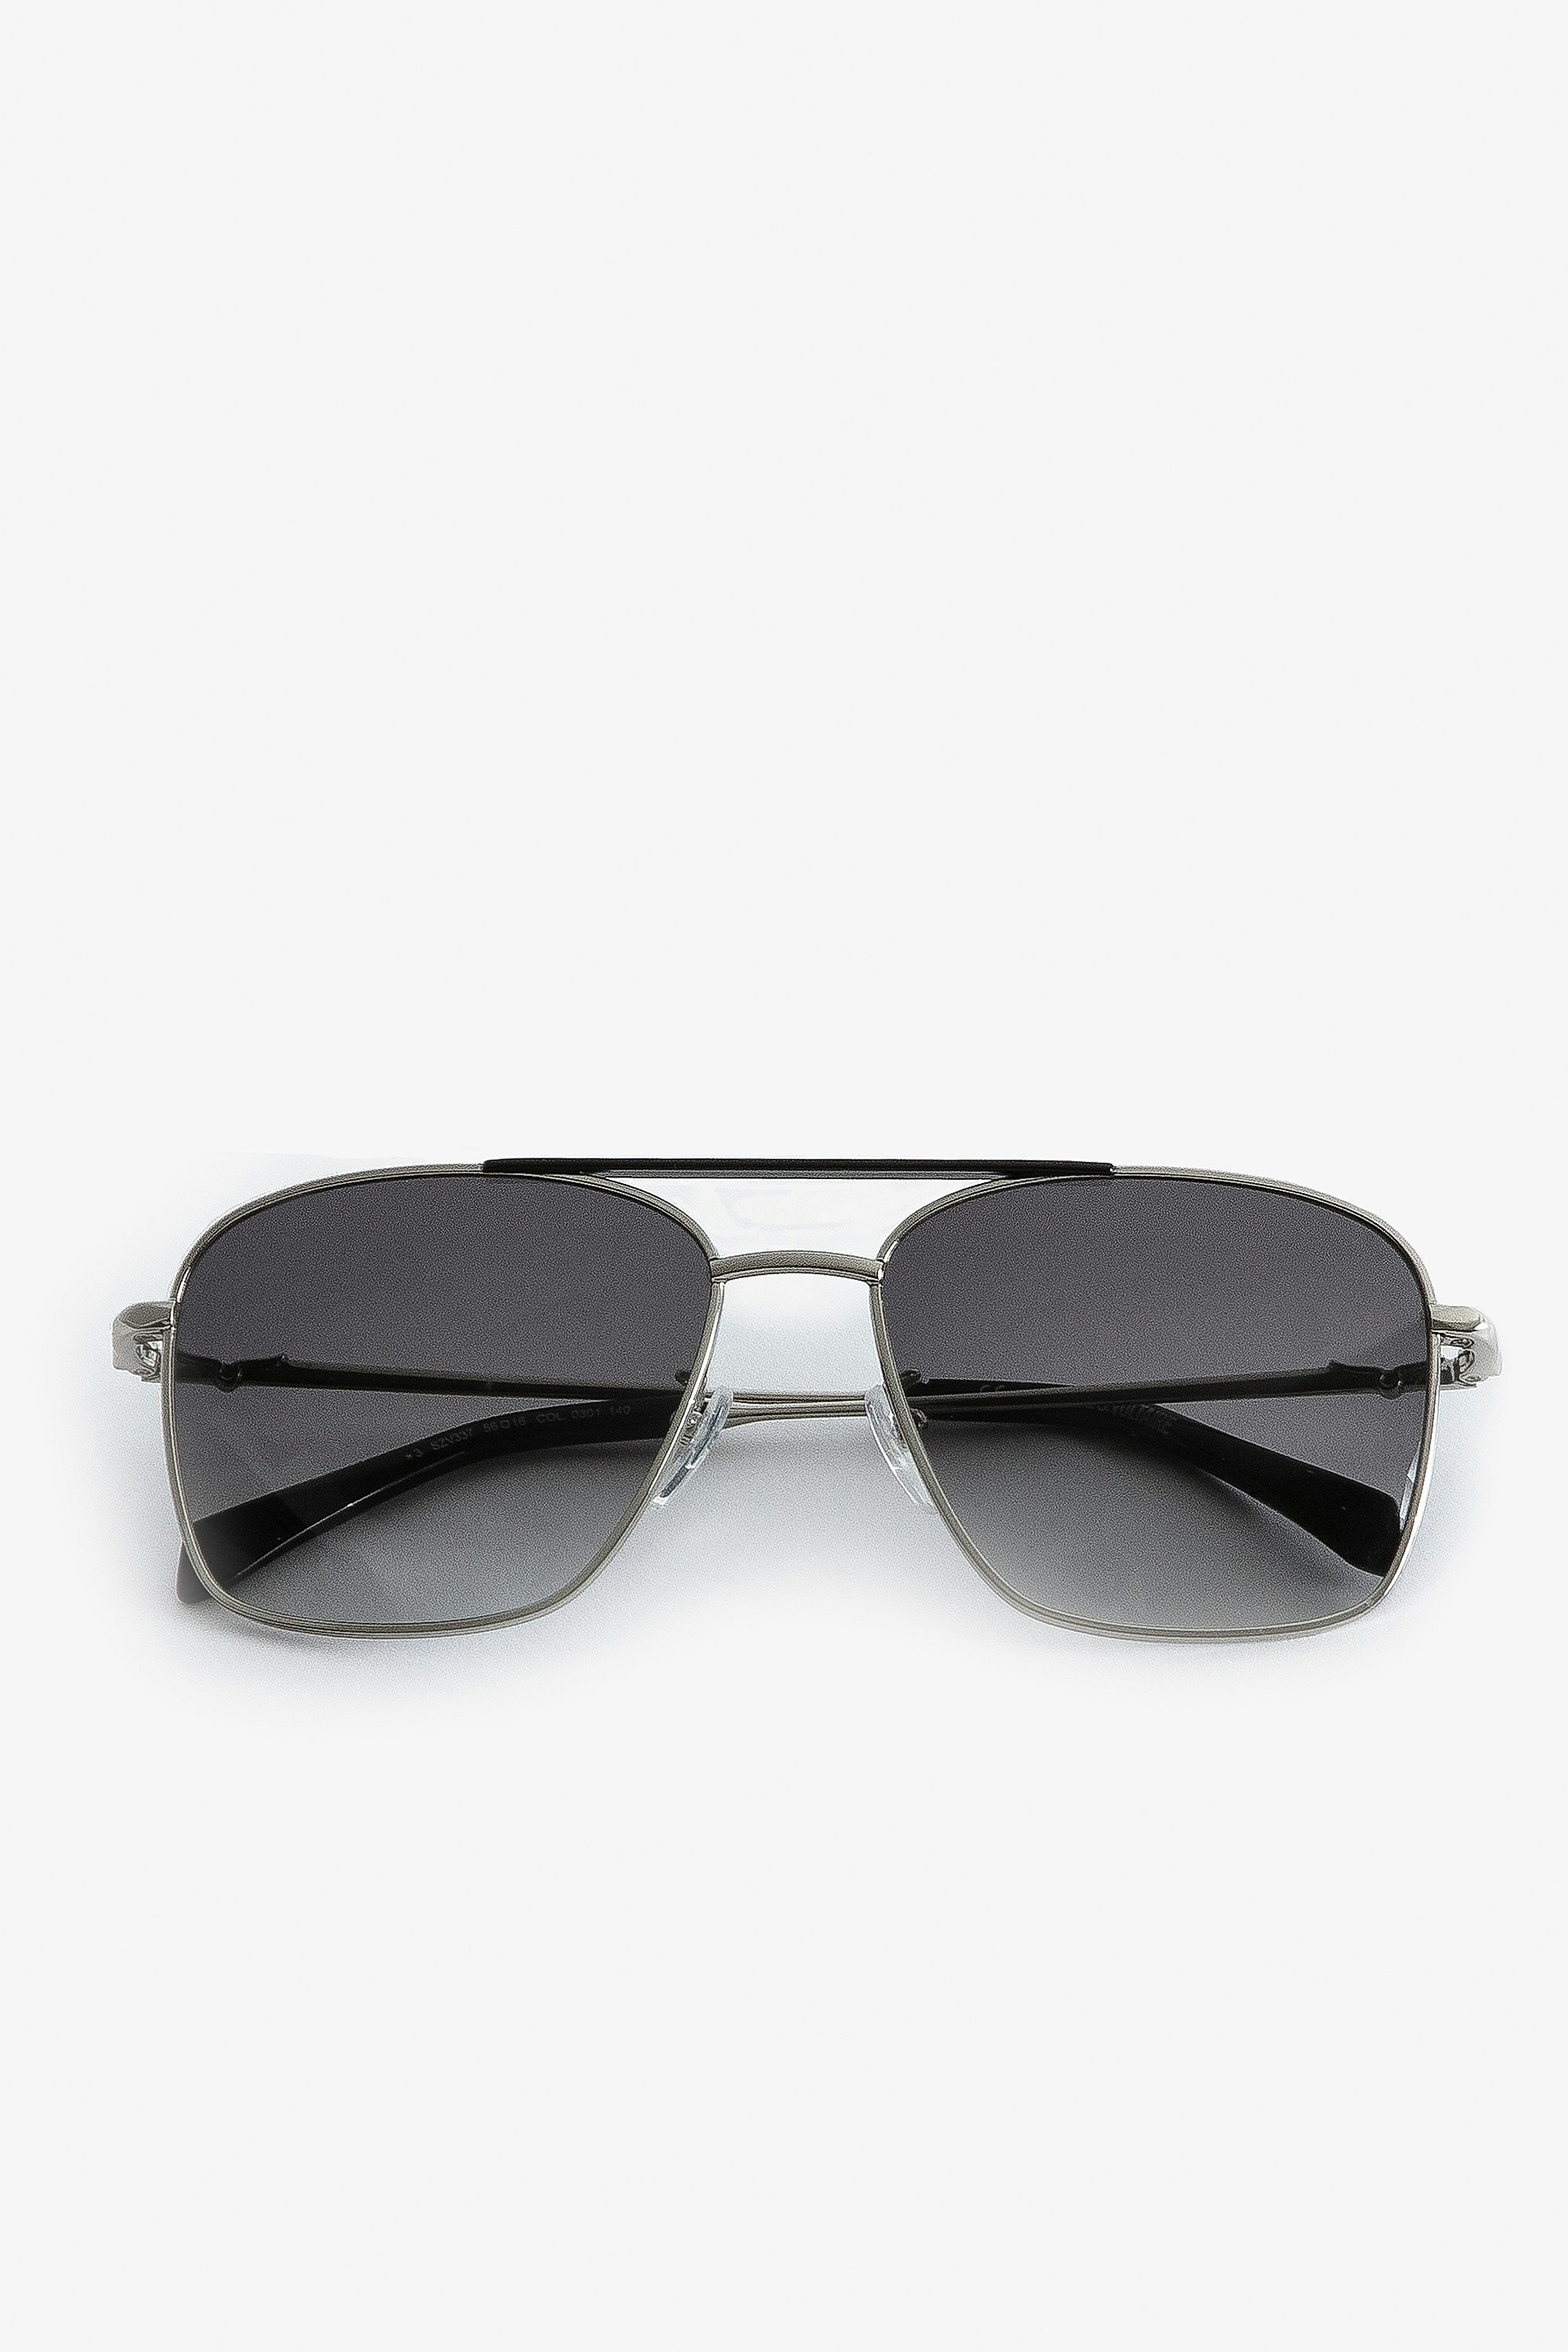 Aviator Wings Sunglasses Unisex aviator sunglasses in black metal with smoke lenses.